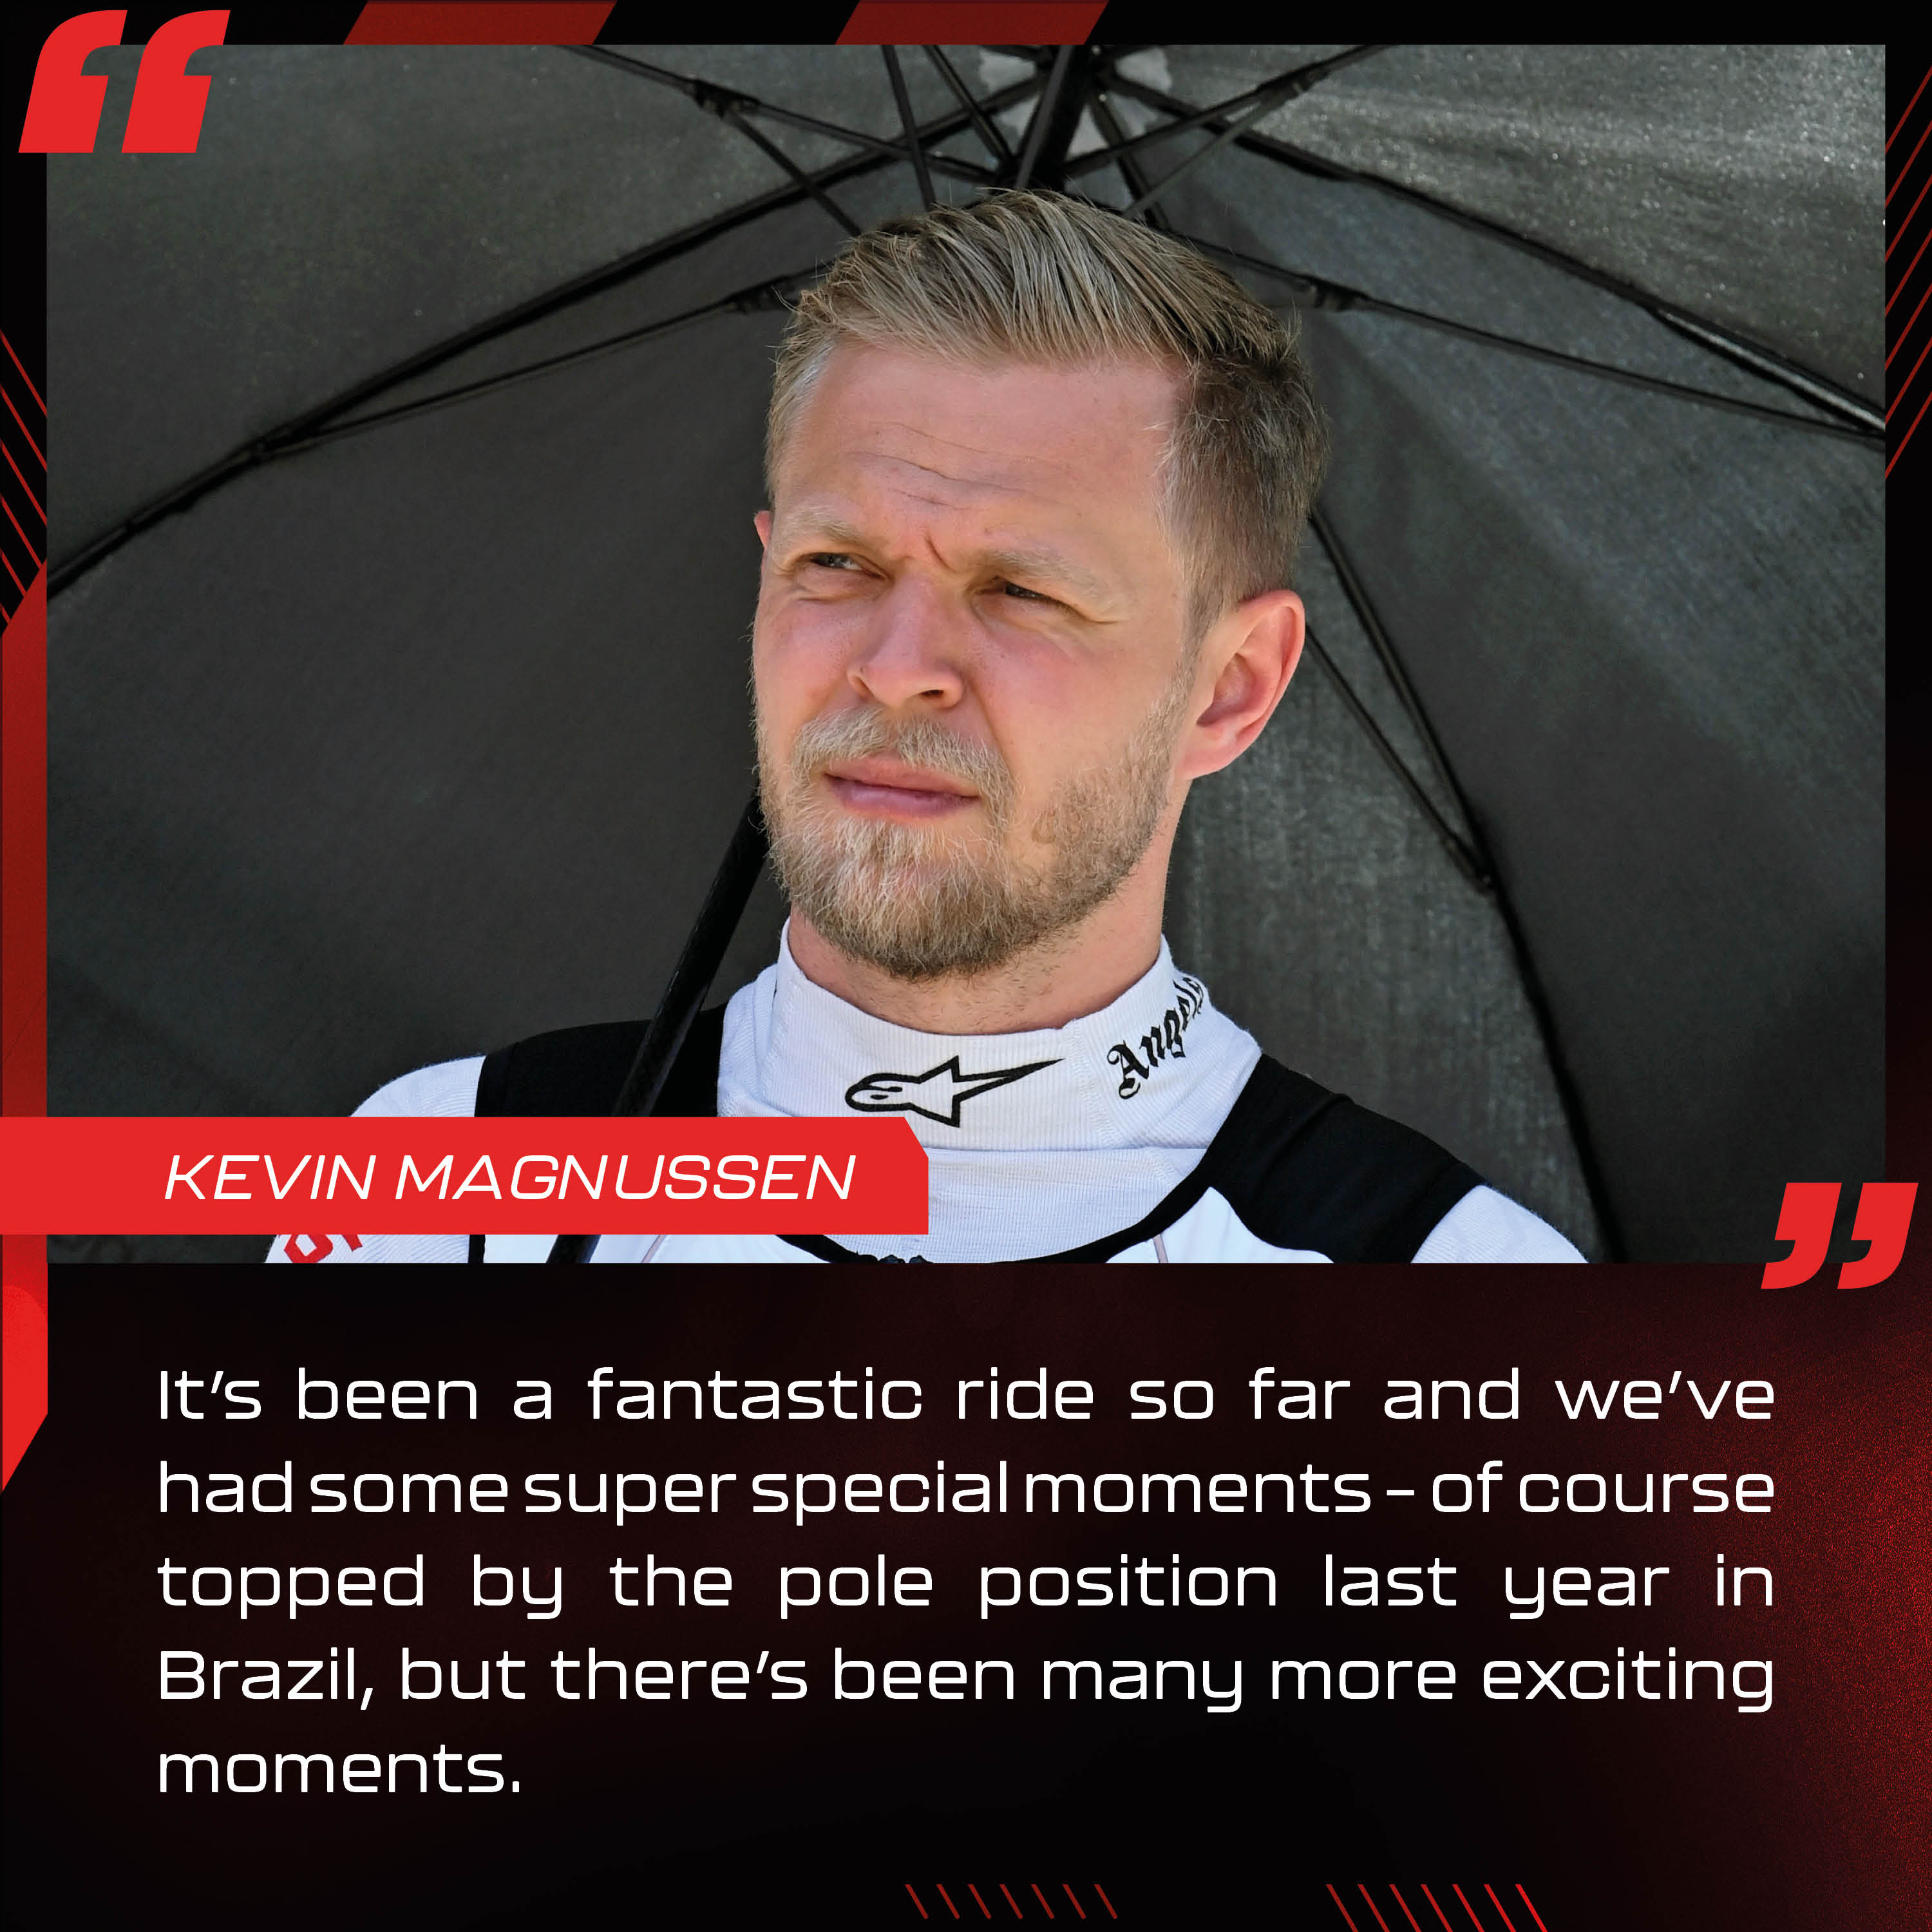 Kevin Magnussen, MoneyGram Haas F1 Team